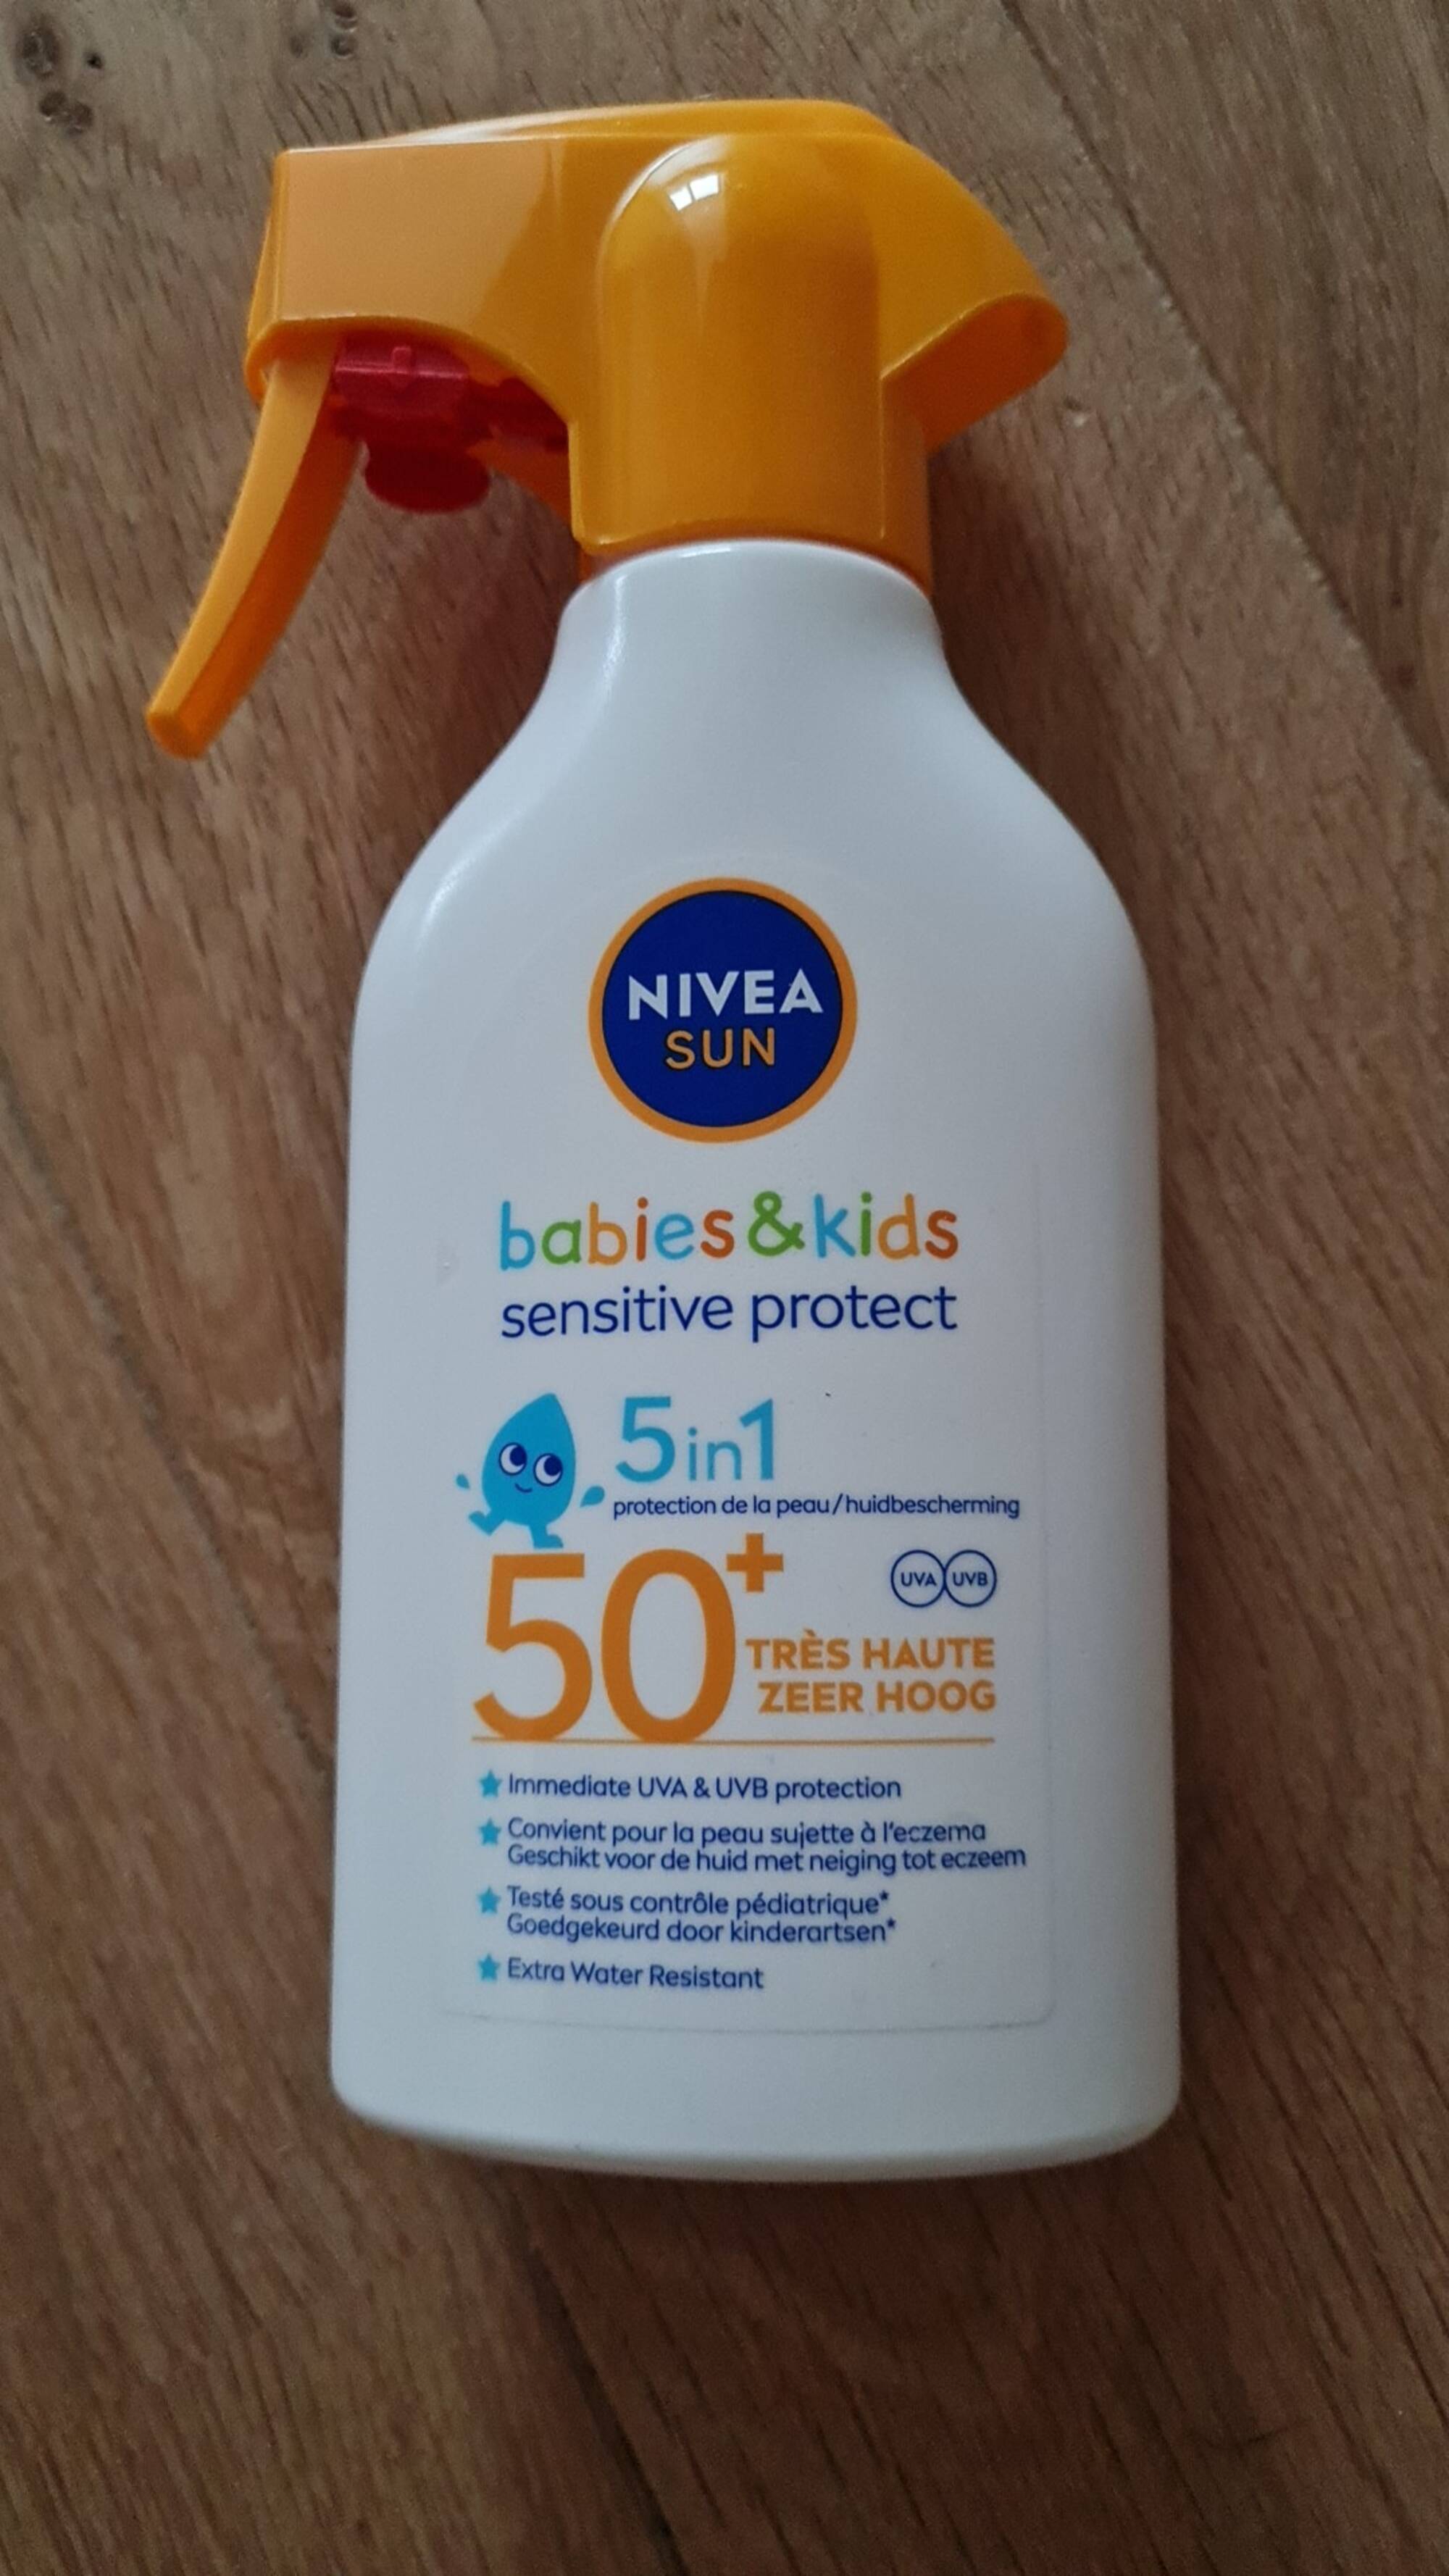 NIVEA - Sun Babies&kids Sensitive protect 5in1 50+ très haute